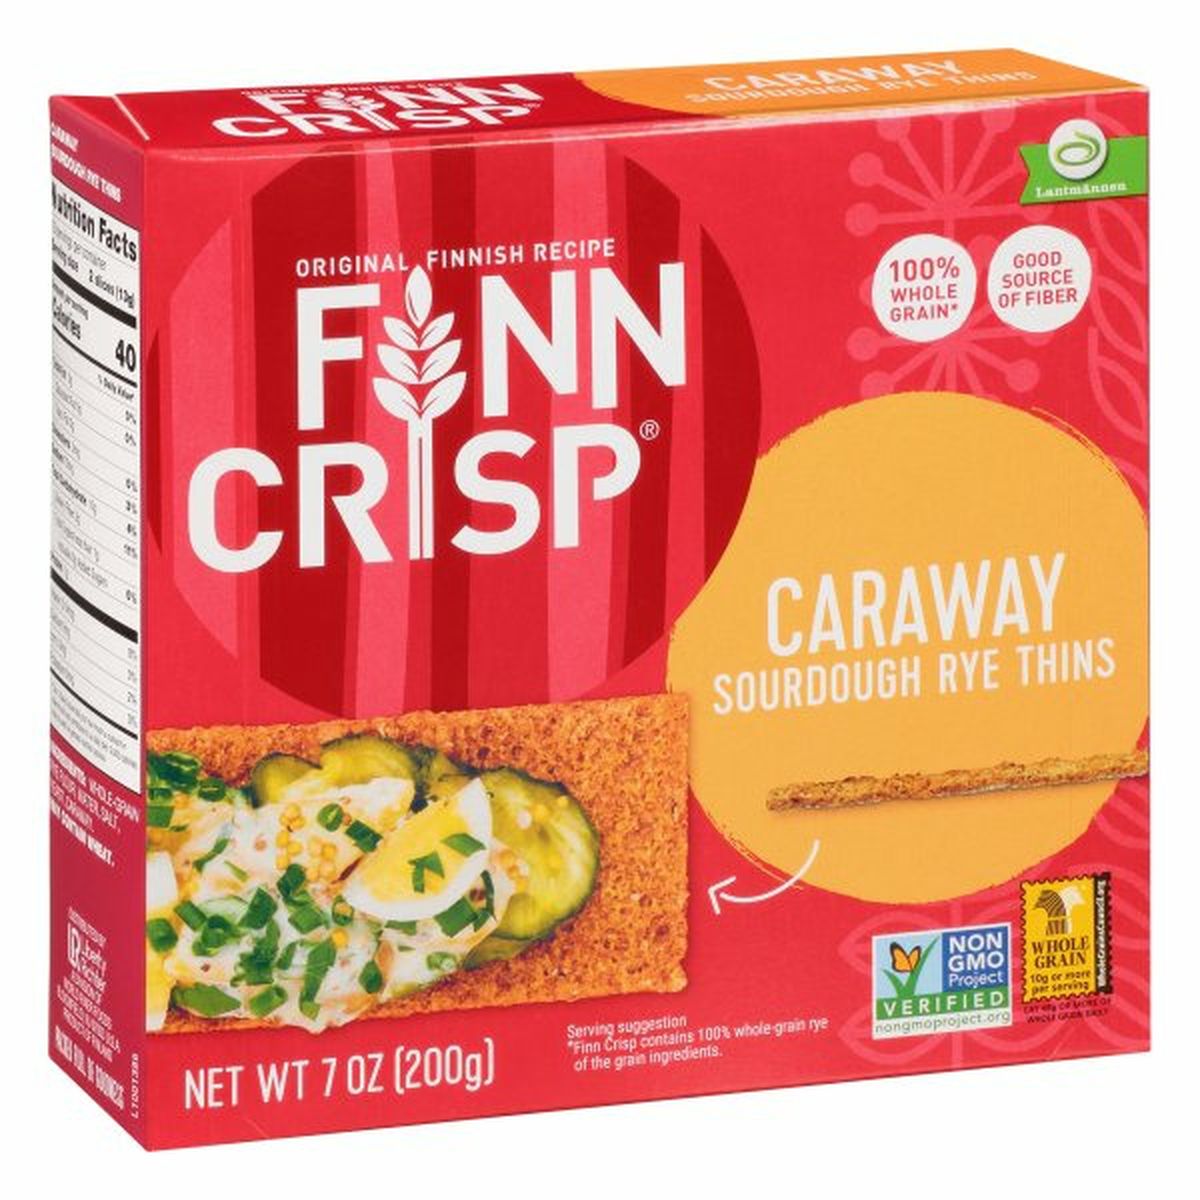 Calories in FINN CRISP Sourdough Rye Thins, Caraway